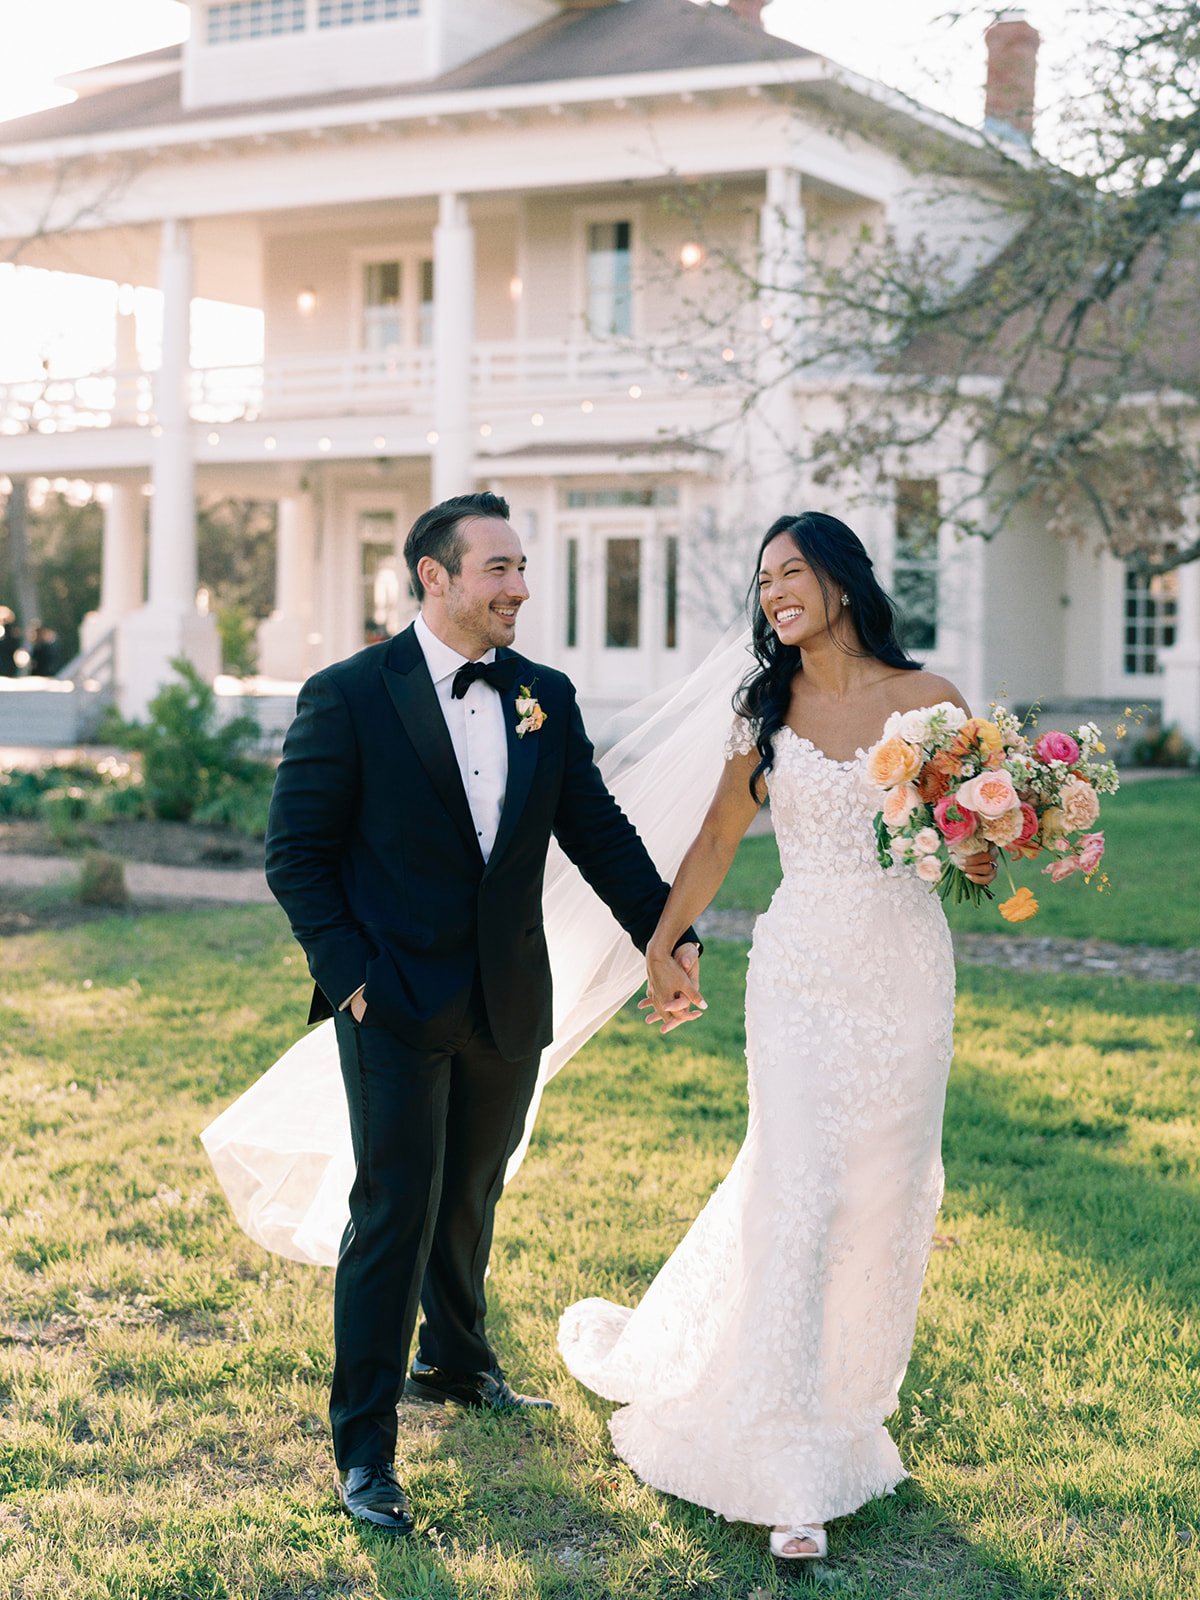 Best-Austin-Wedding-Photographers-Elopement-Film-35mm-Asheville-Santa-Barbara-Grand-Lady-174.jpg